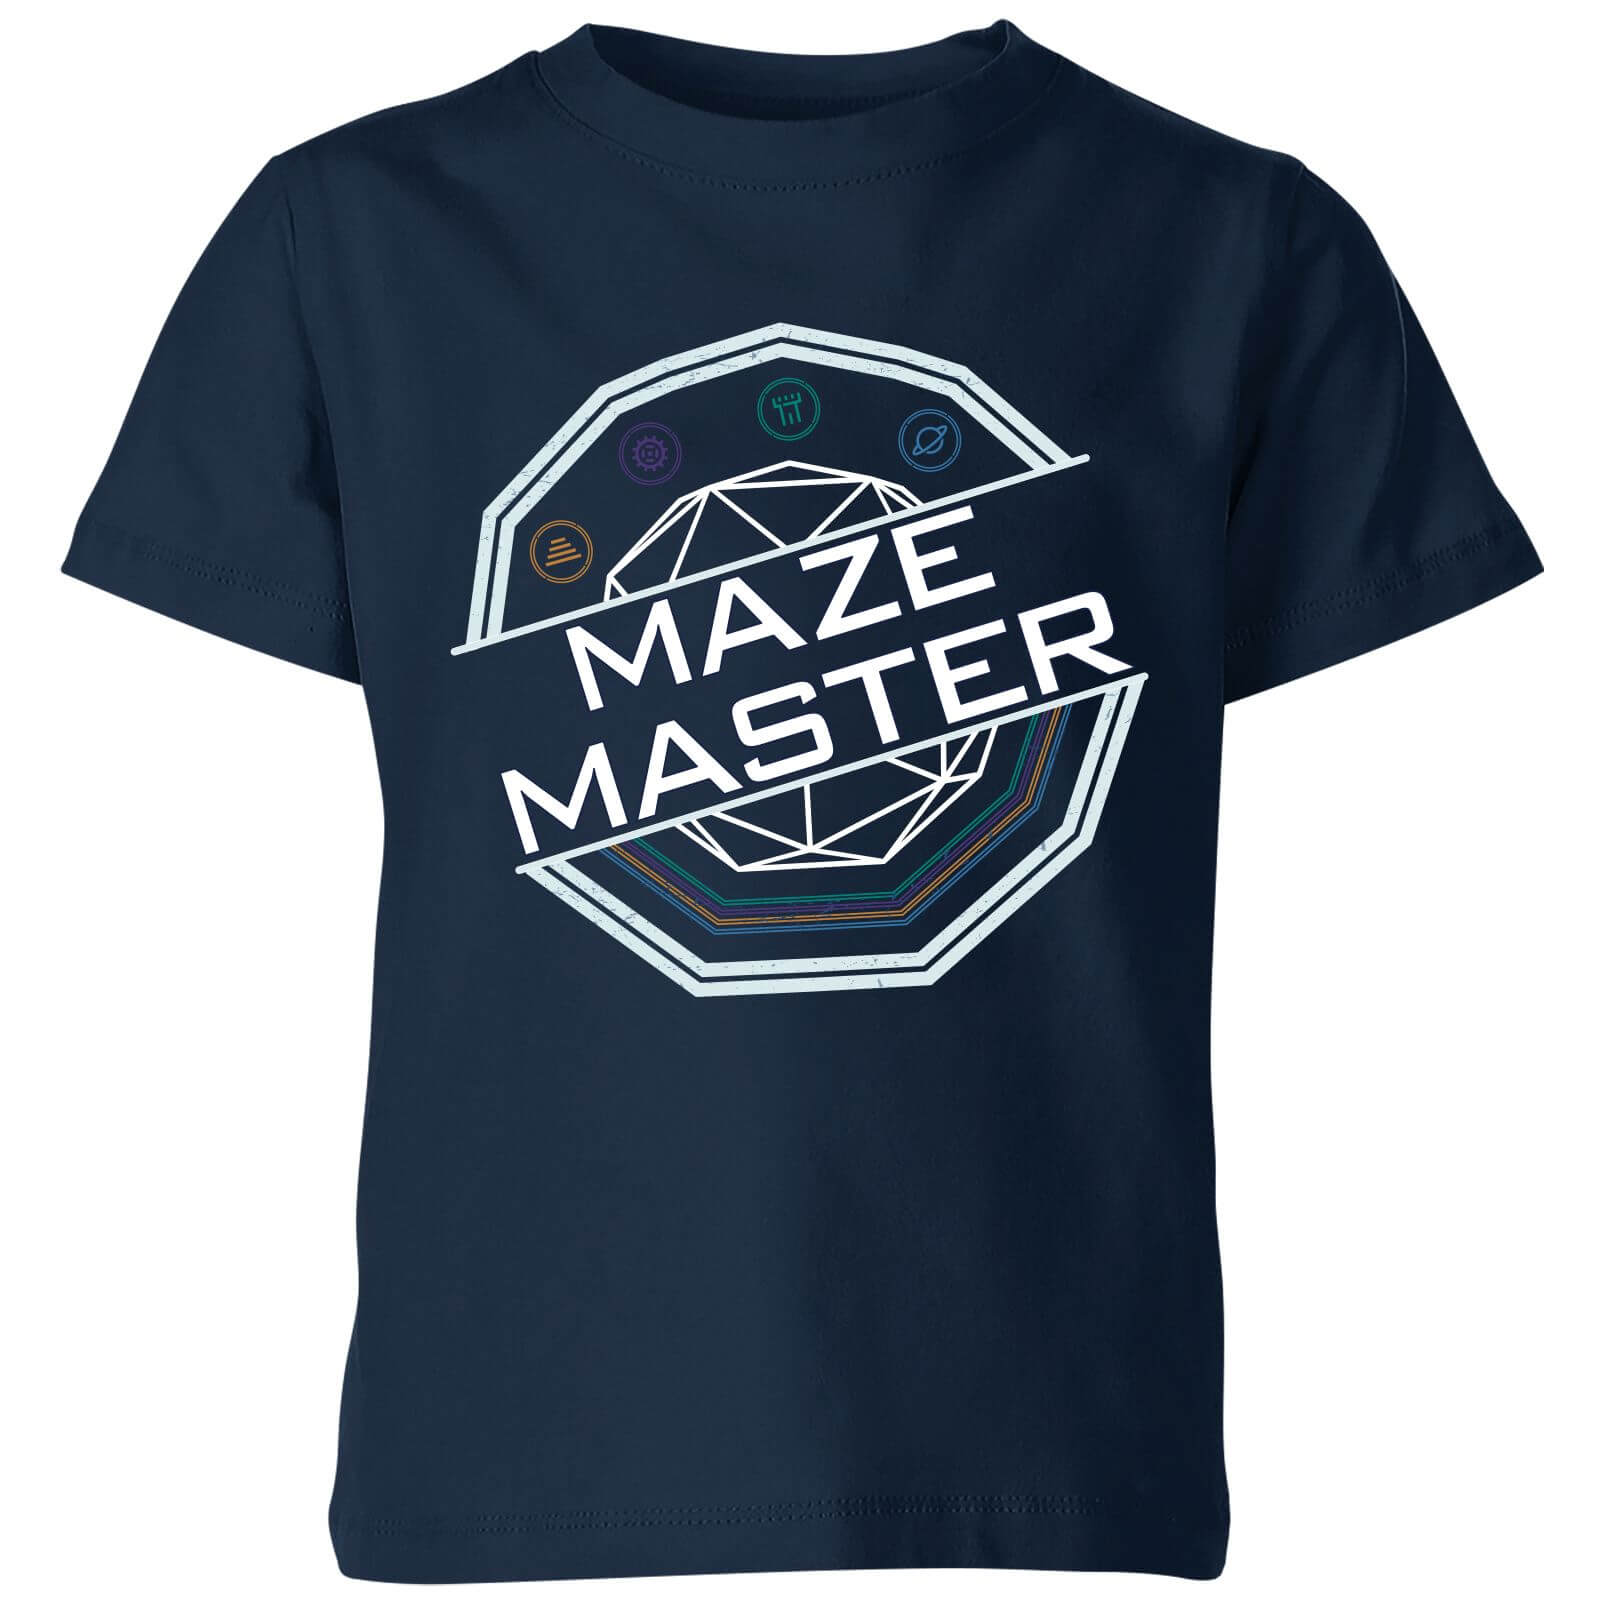 Crystal Maze Maze Master Kids' T-Shirt - Navy - 3-4 Years